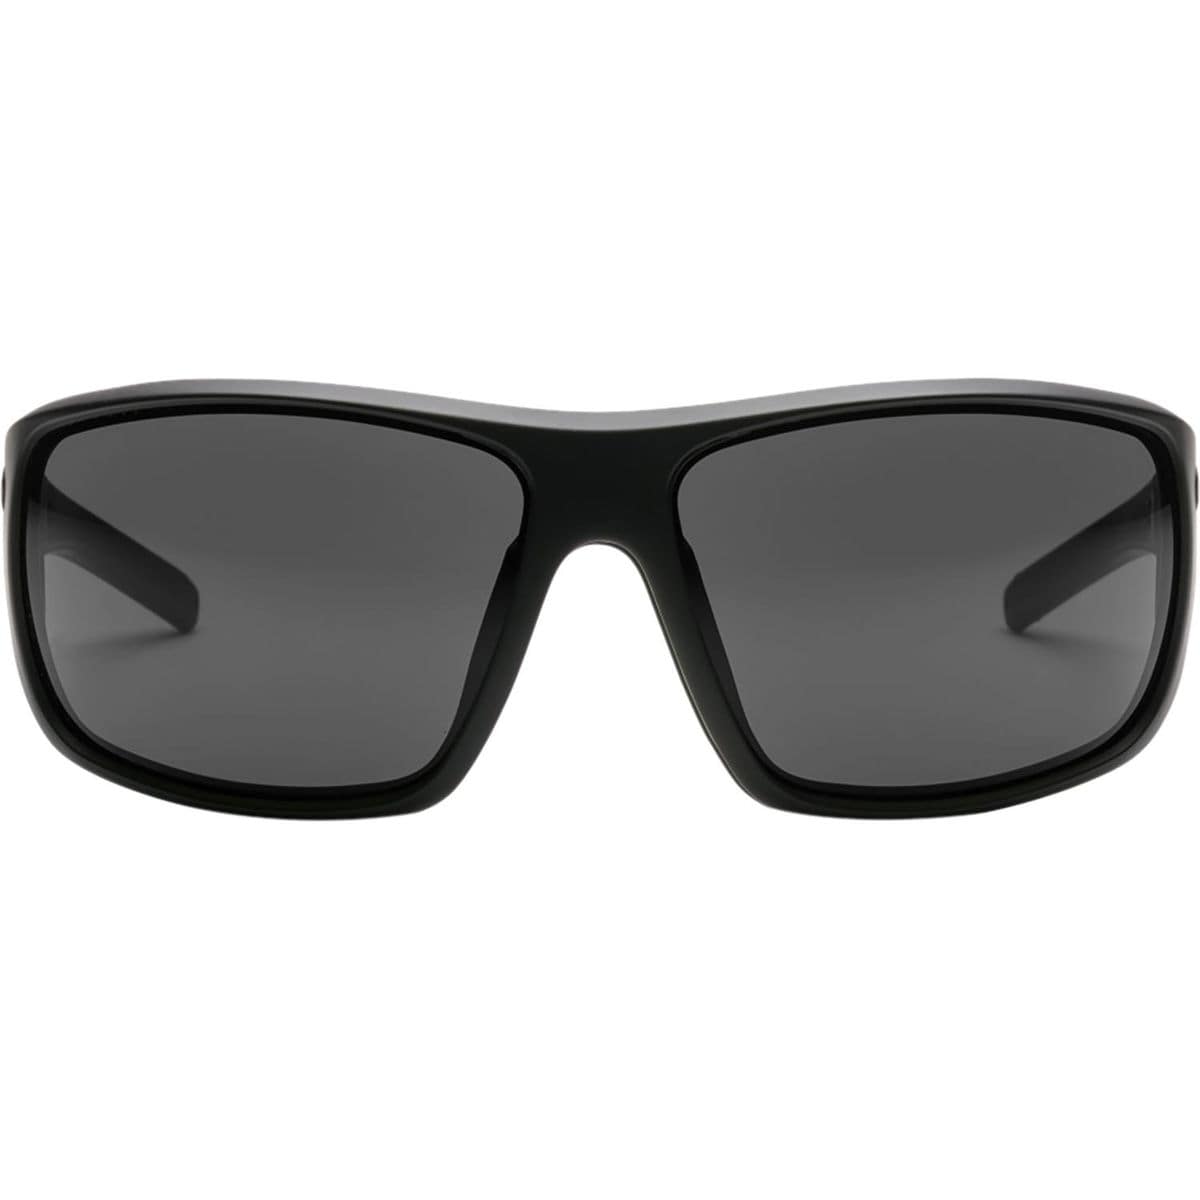 Electric Backbone S Sunglasses - Men's - Accessories